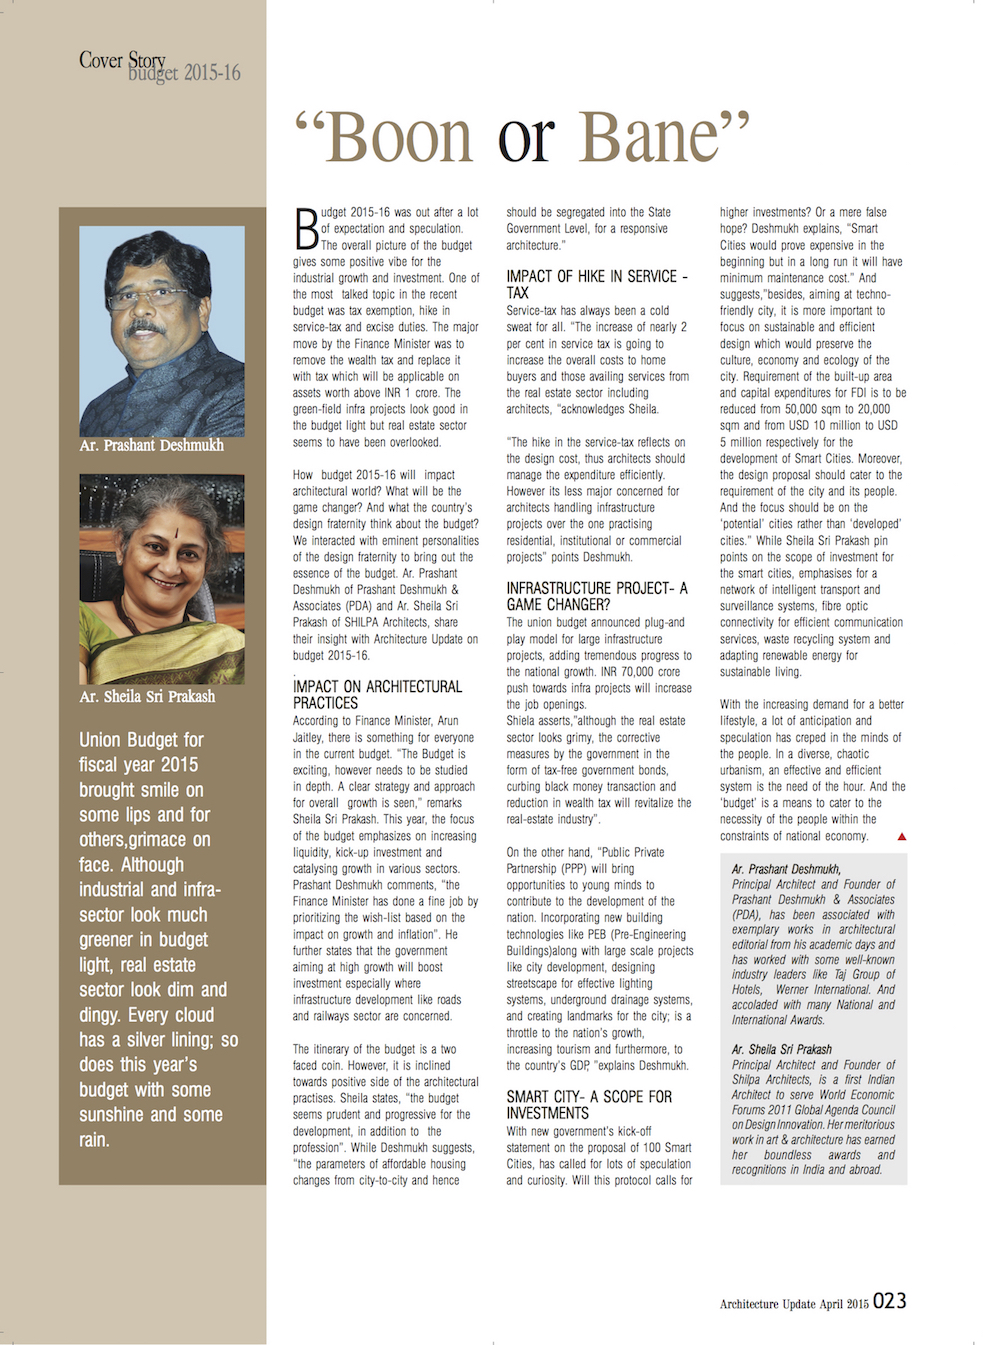 Architecture Update Magazine with Sheila Sri Prakash